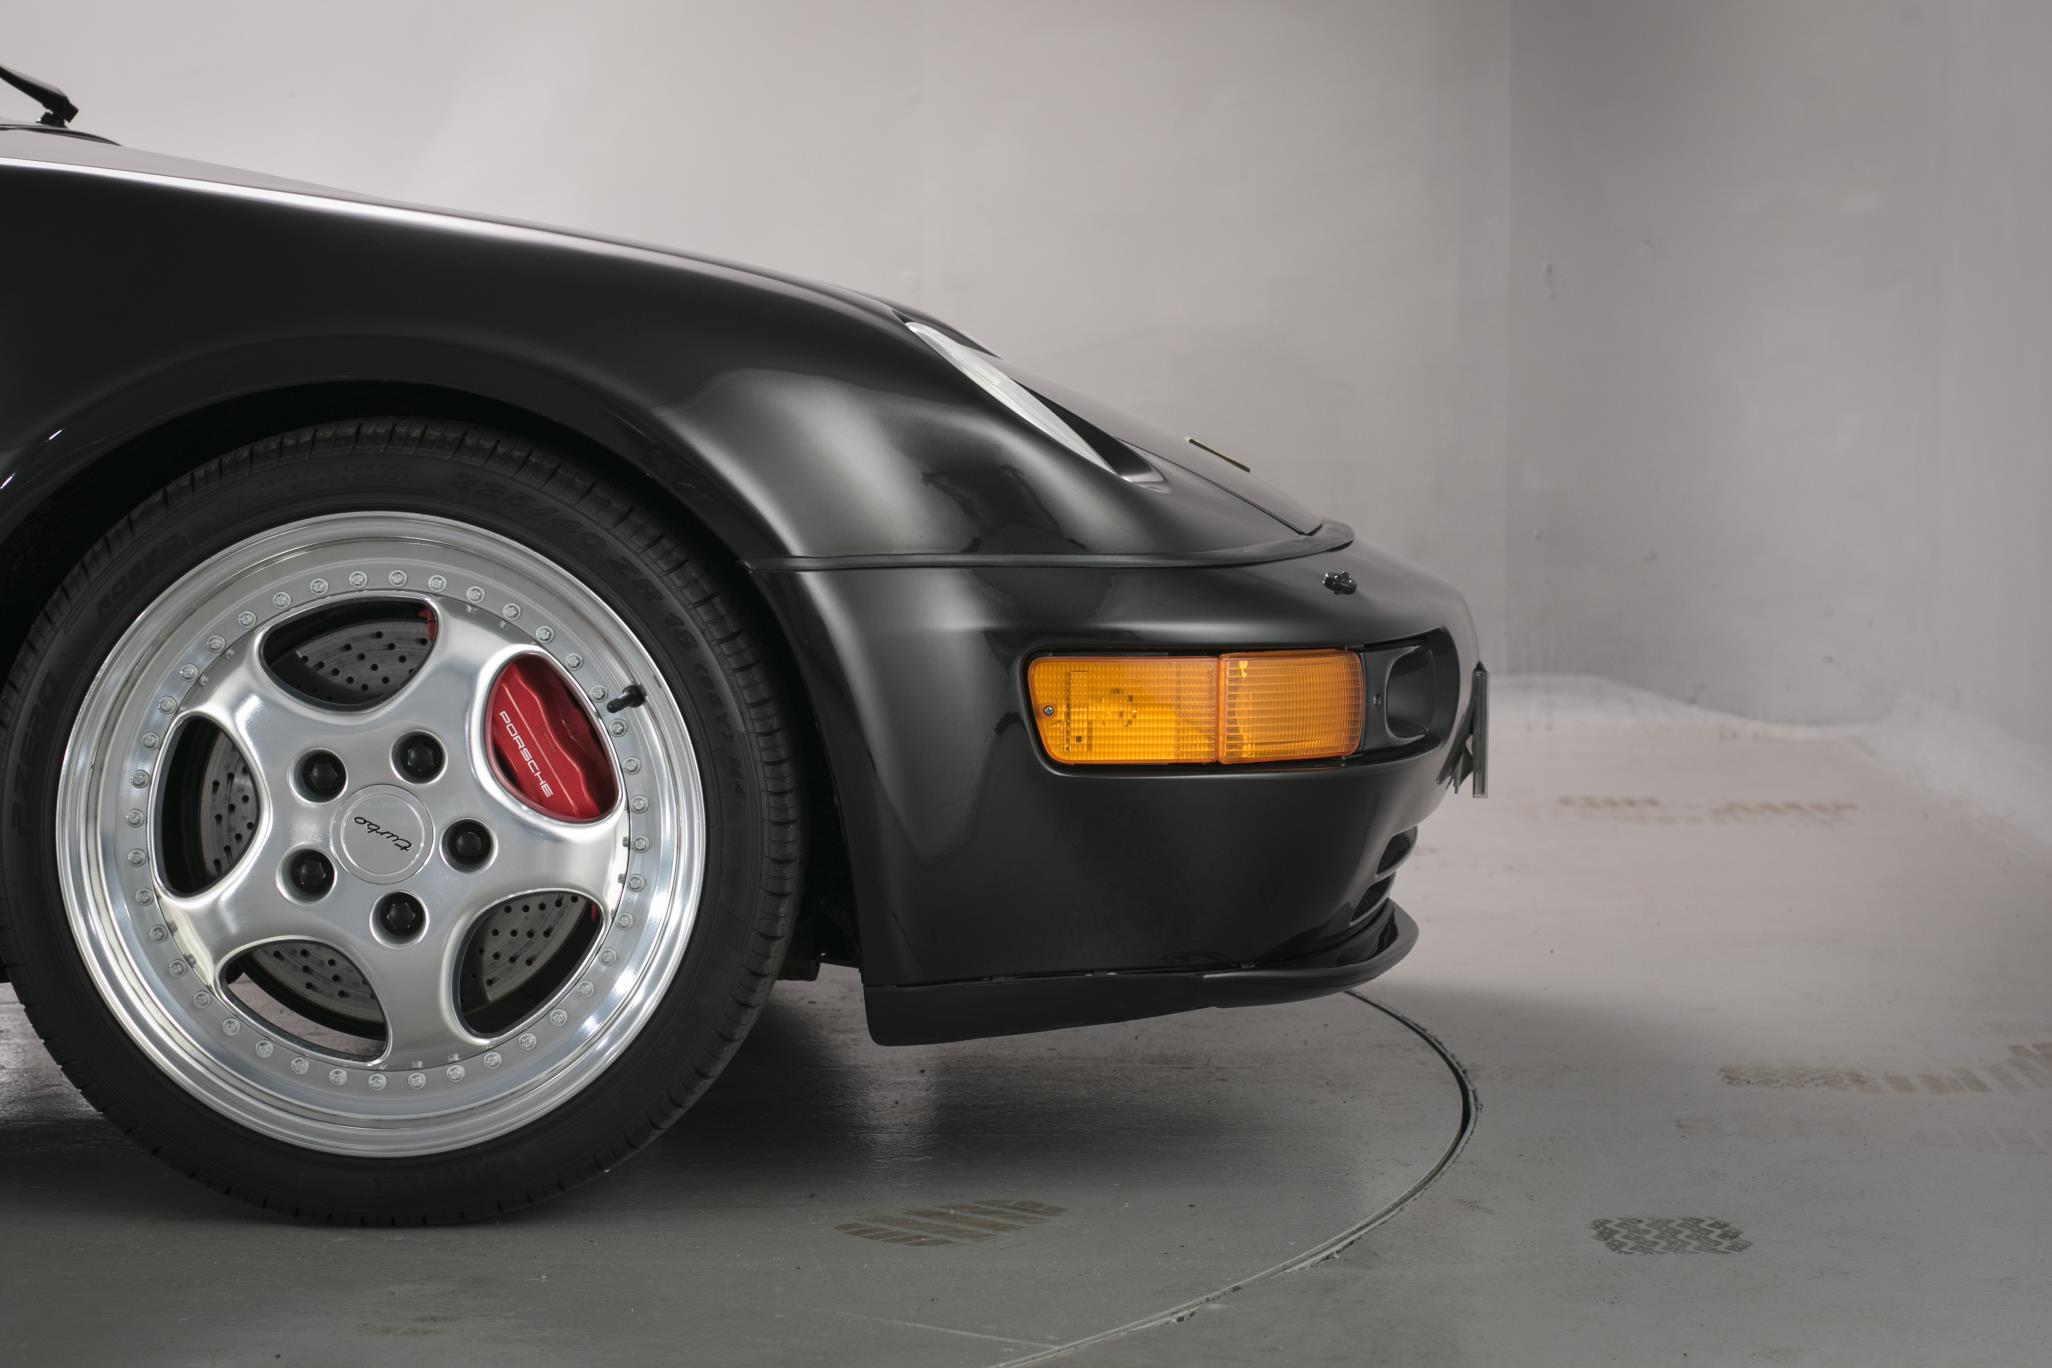 Ultra Rare Porsche 911 Turbo Flatnose Comes Up For Sale In U K